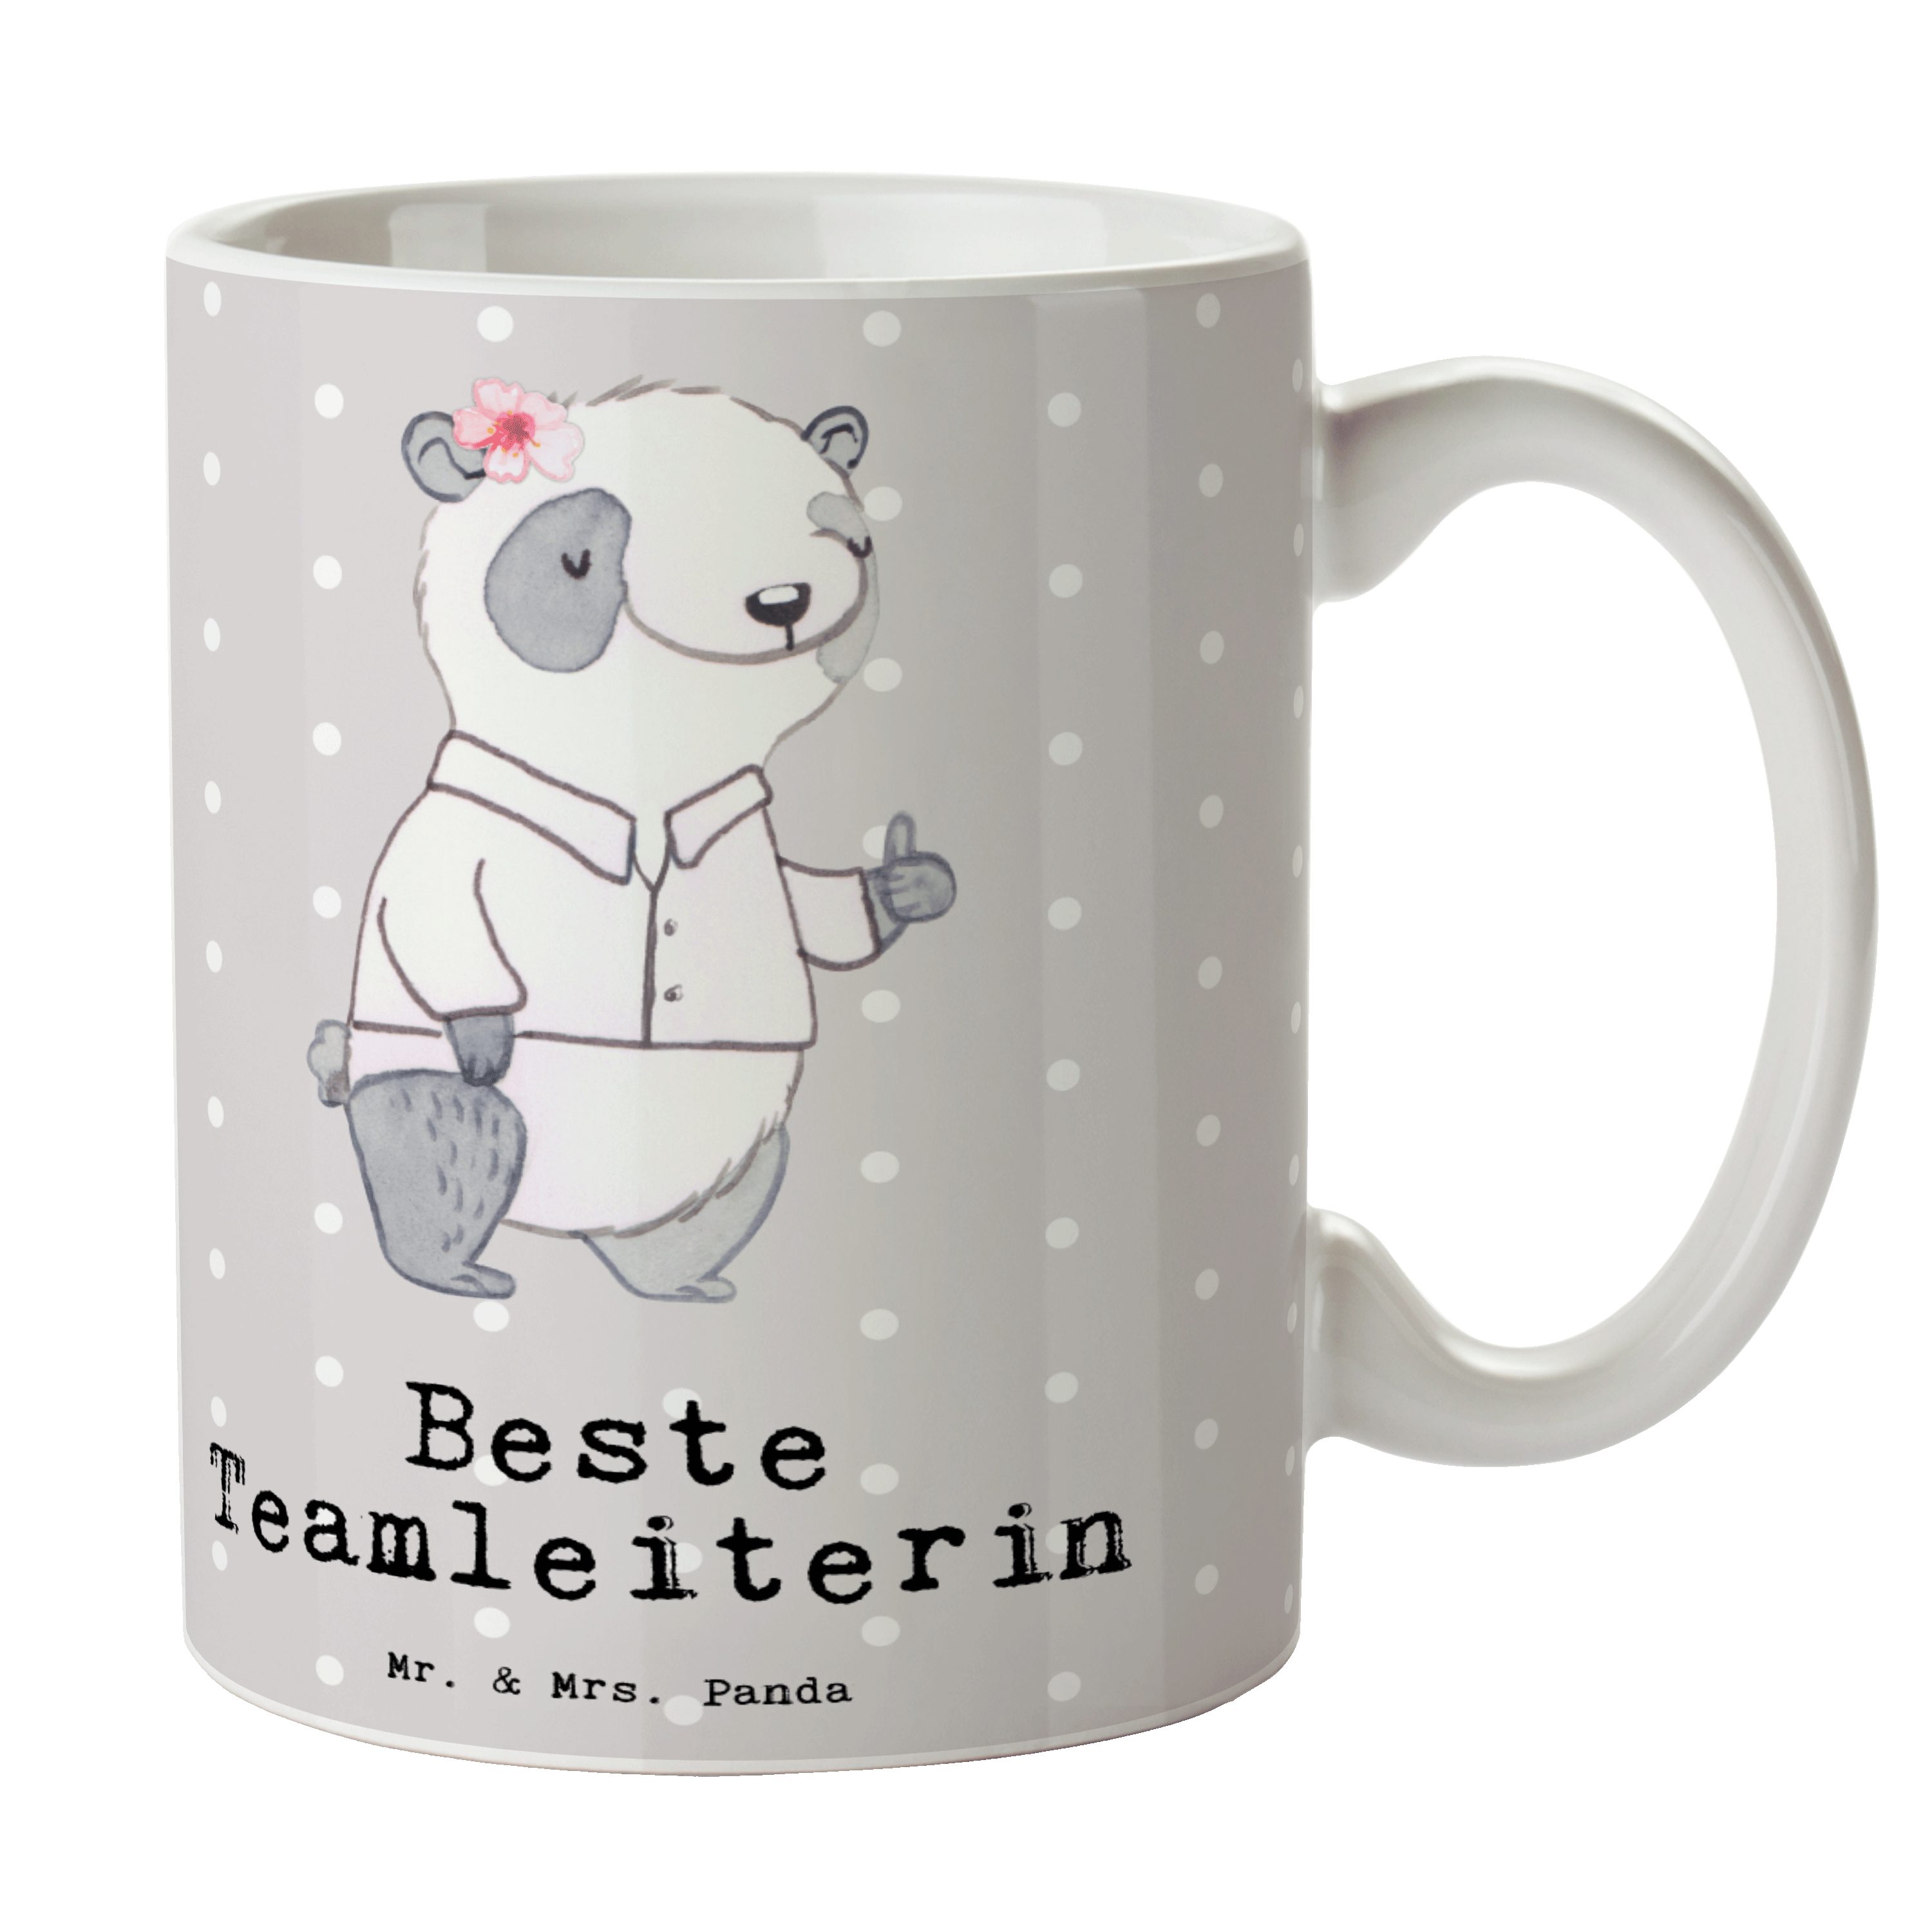 Mr. & Mrs. Panda Tasse Panda Beste Teamleiterin - Grau Pastell - Geschenk, Bedanken, Kaffeeb, Keramik